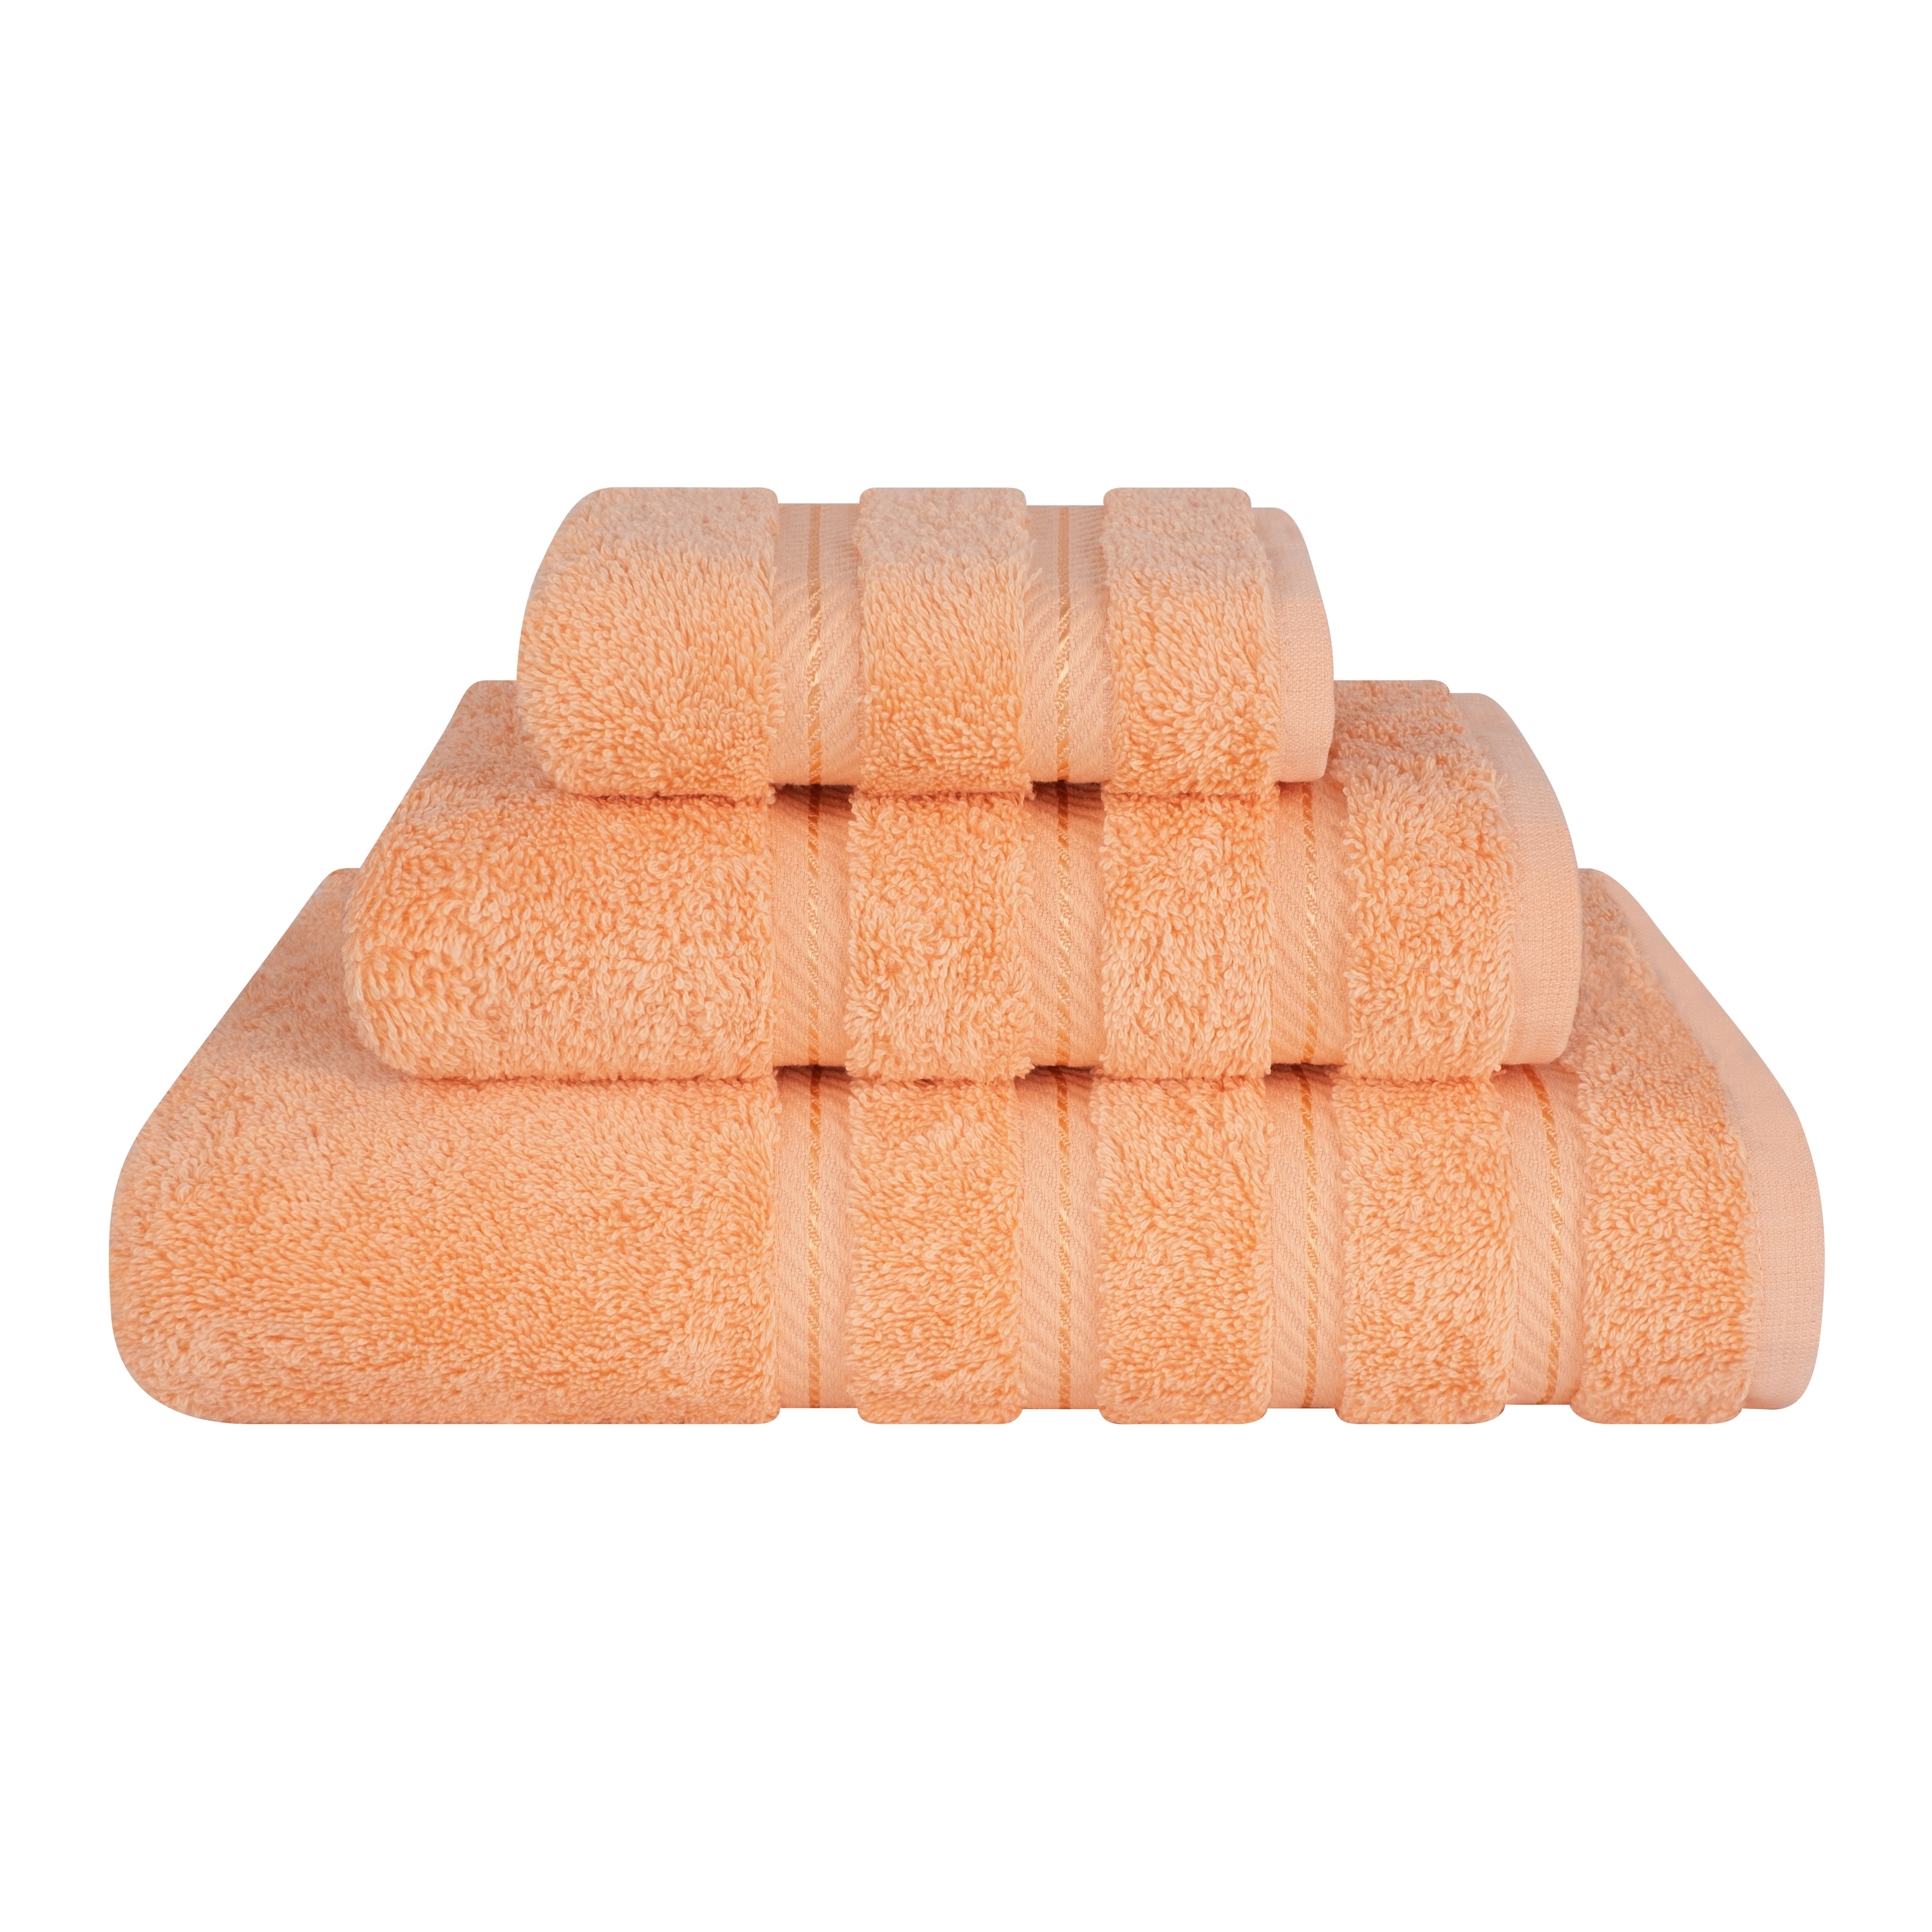 https://ak1.ostkcdn.com/images/products/is/images/direct/cd6cd601feb918bdff9d9ddf31e7647bca051aeb/American-Soft-Linen-3-Piece%2C-100%25-Genuine-Turkish-Cotton-Premium-%26-Luxury-Towels-Bathroom-Sets.jpg